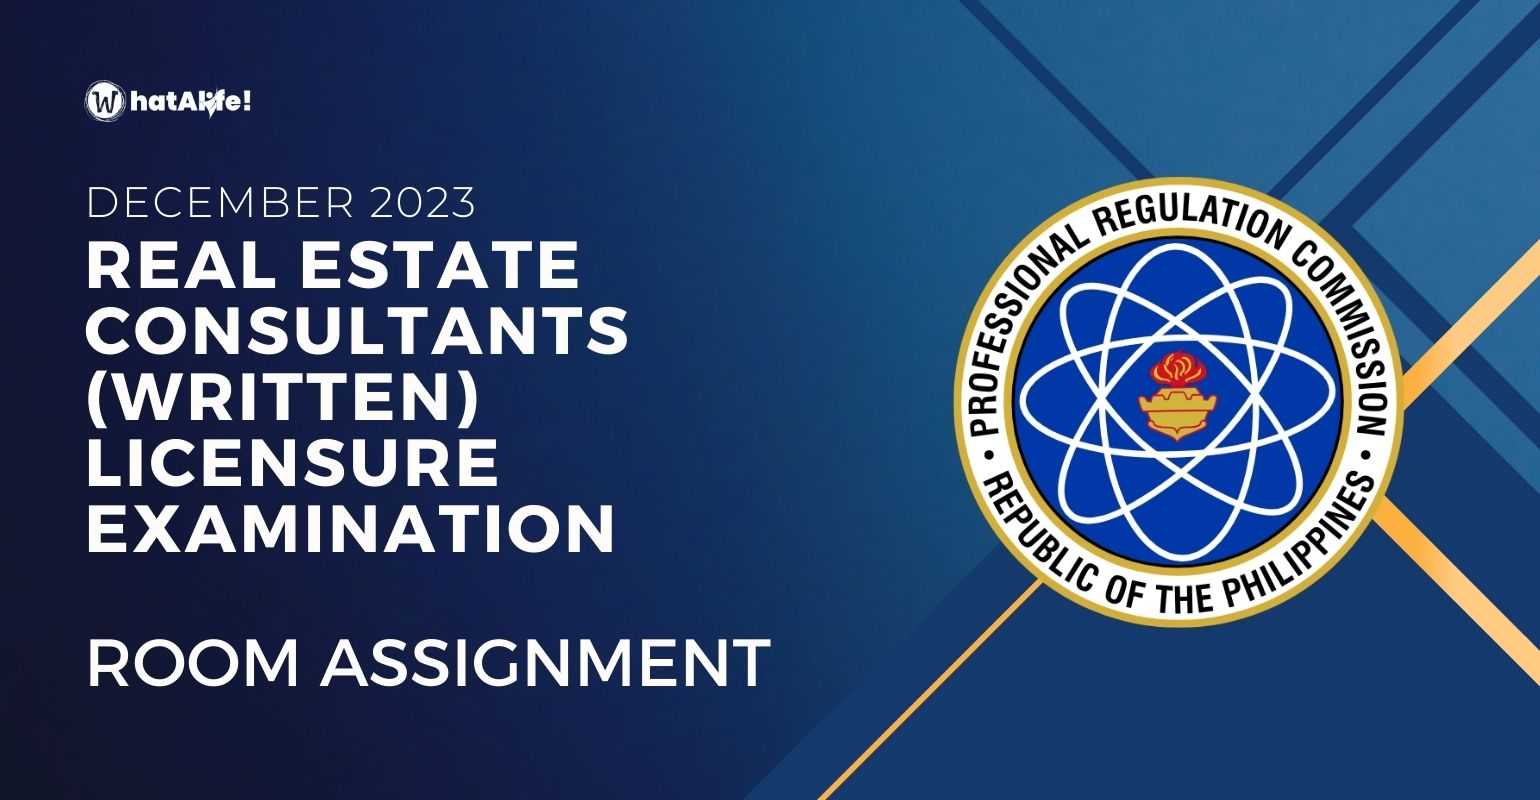 room assignment december 2023 real estate consultants written licensure exam